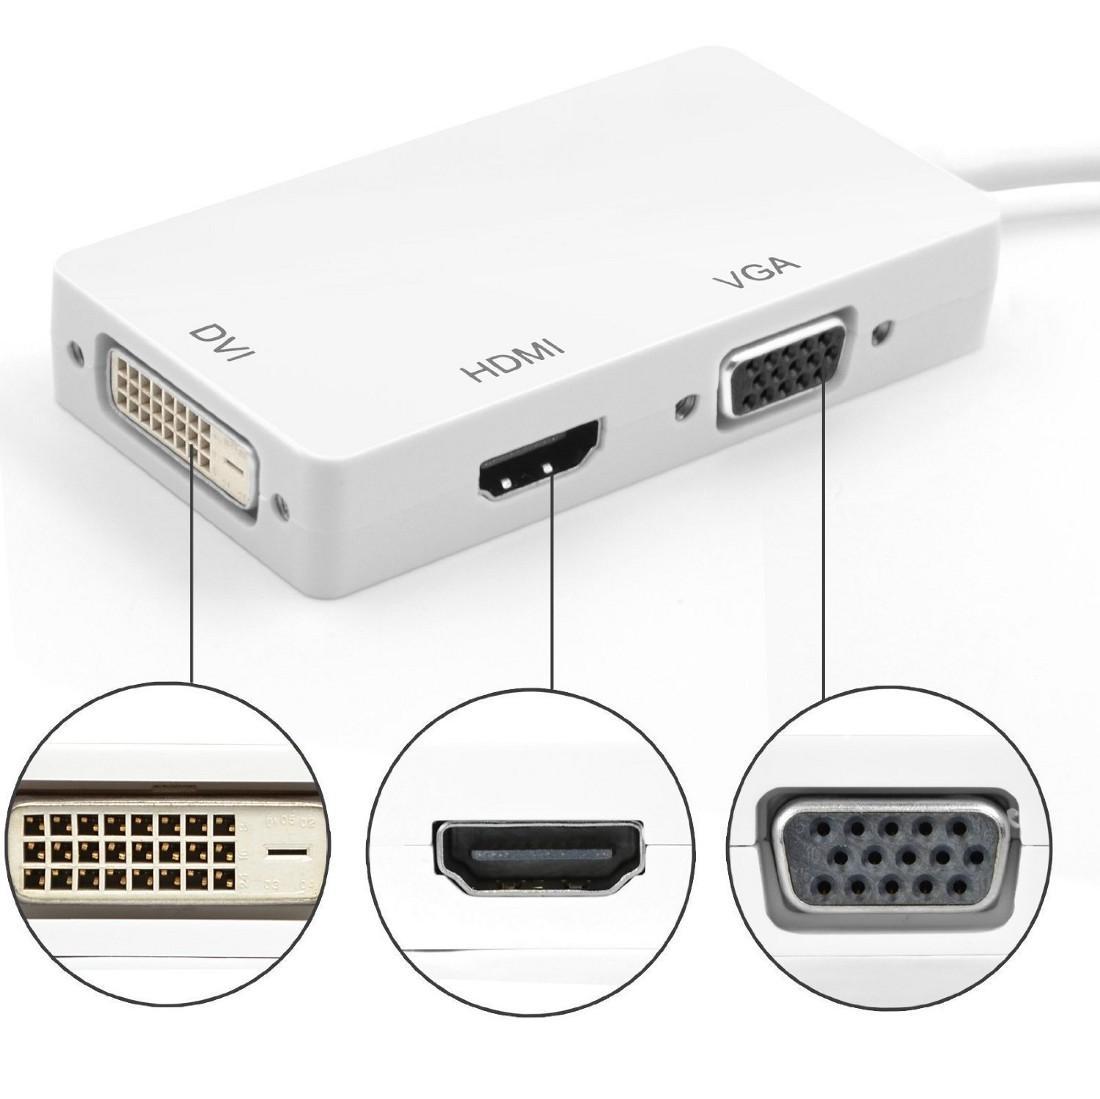 TOPELEK 4Kx2K 3 in 1 Mini Displayport DP 1.2 auf HDMI DVI VGA Kabel Adapter Konverter für Apple MacBook MacBook Pro Microsoft iMac MacBook Air Mac Mini